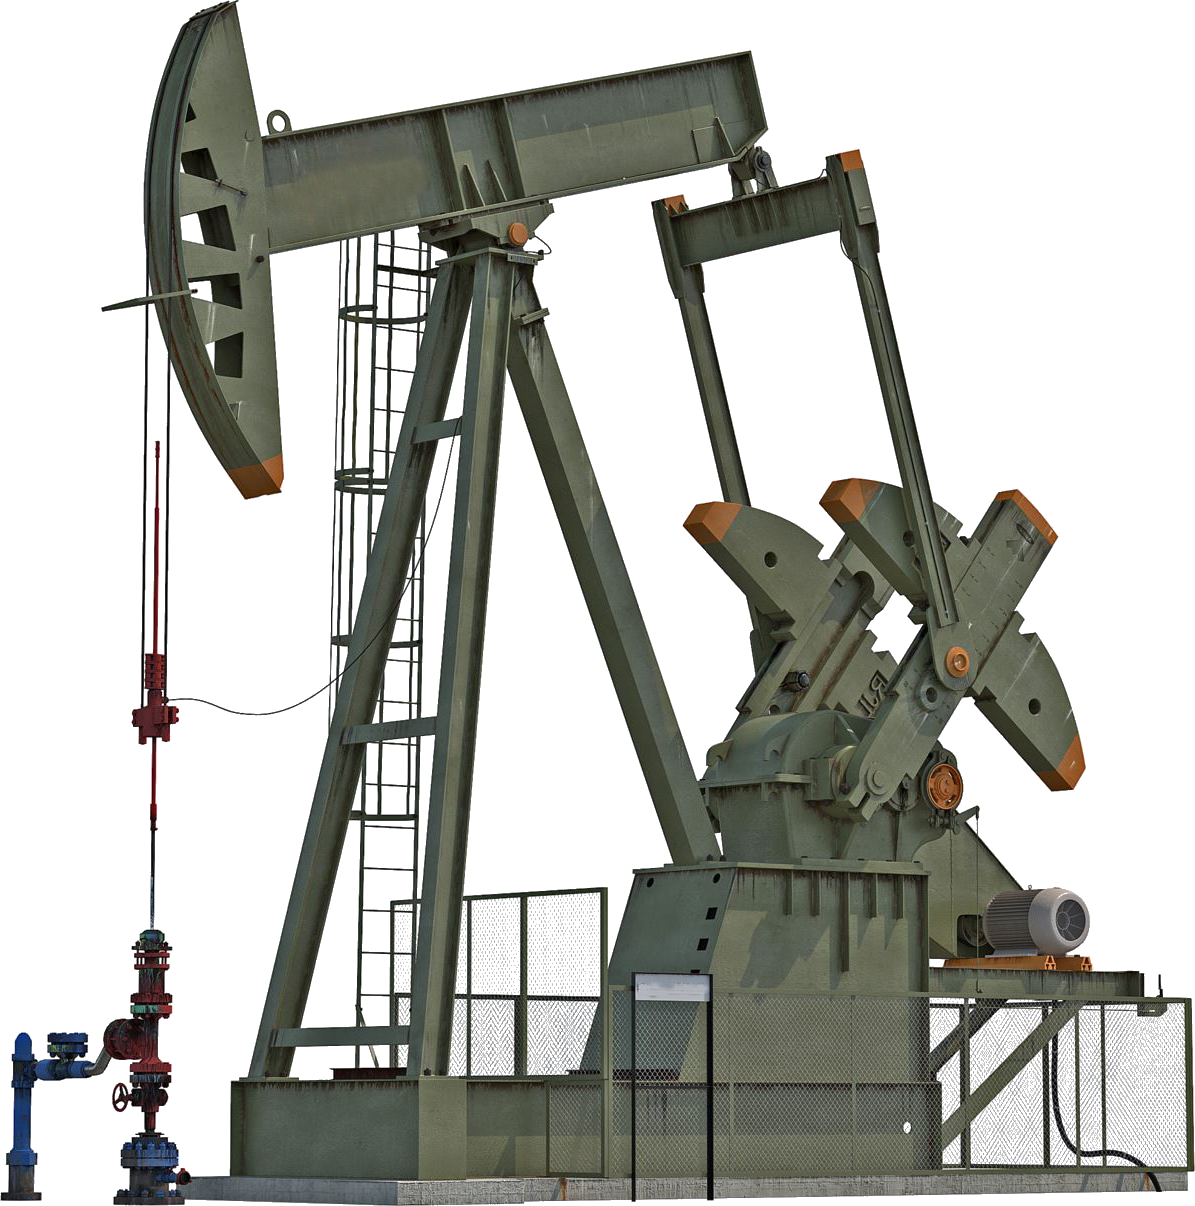 Oil Pump Jack